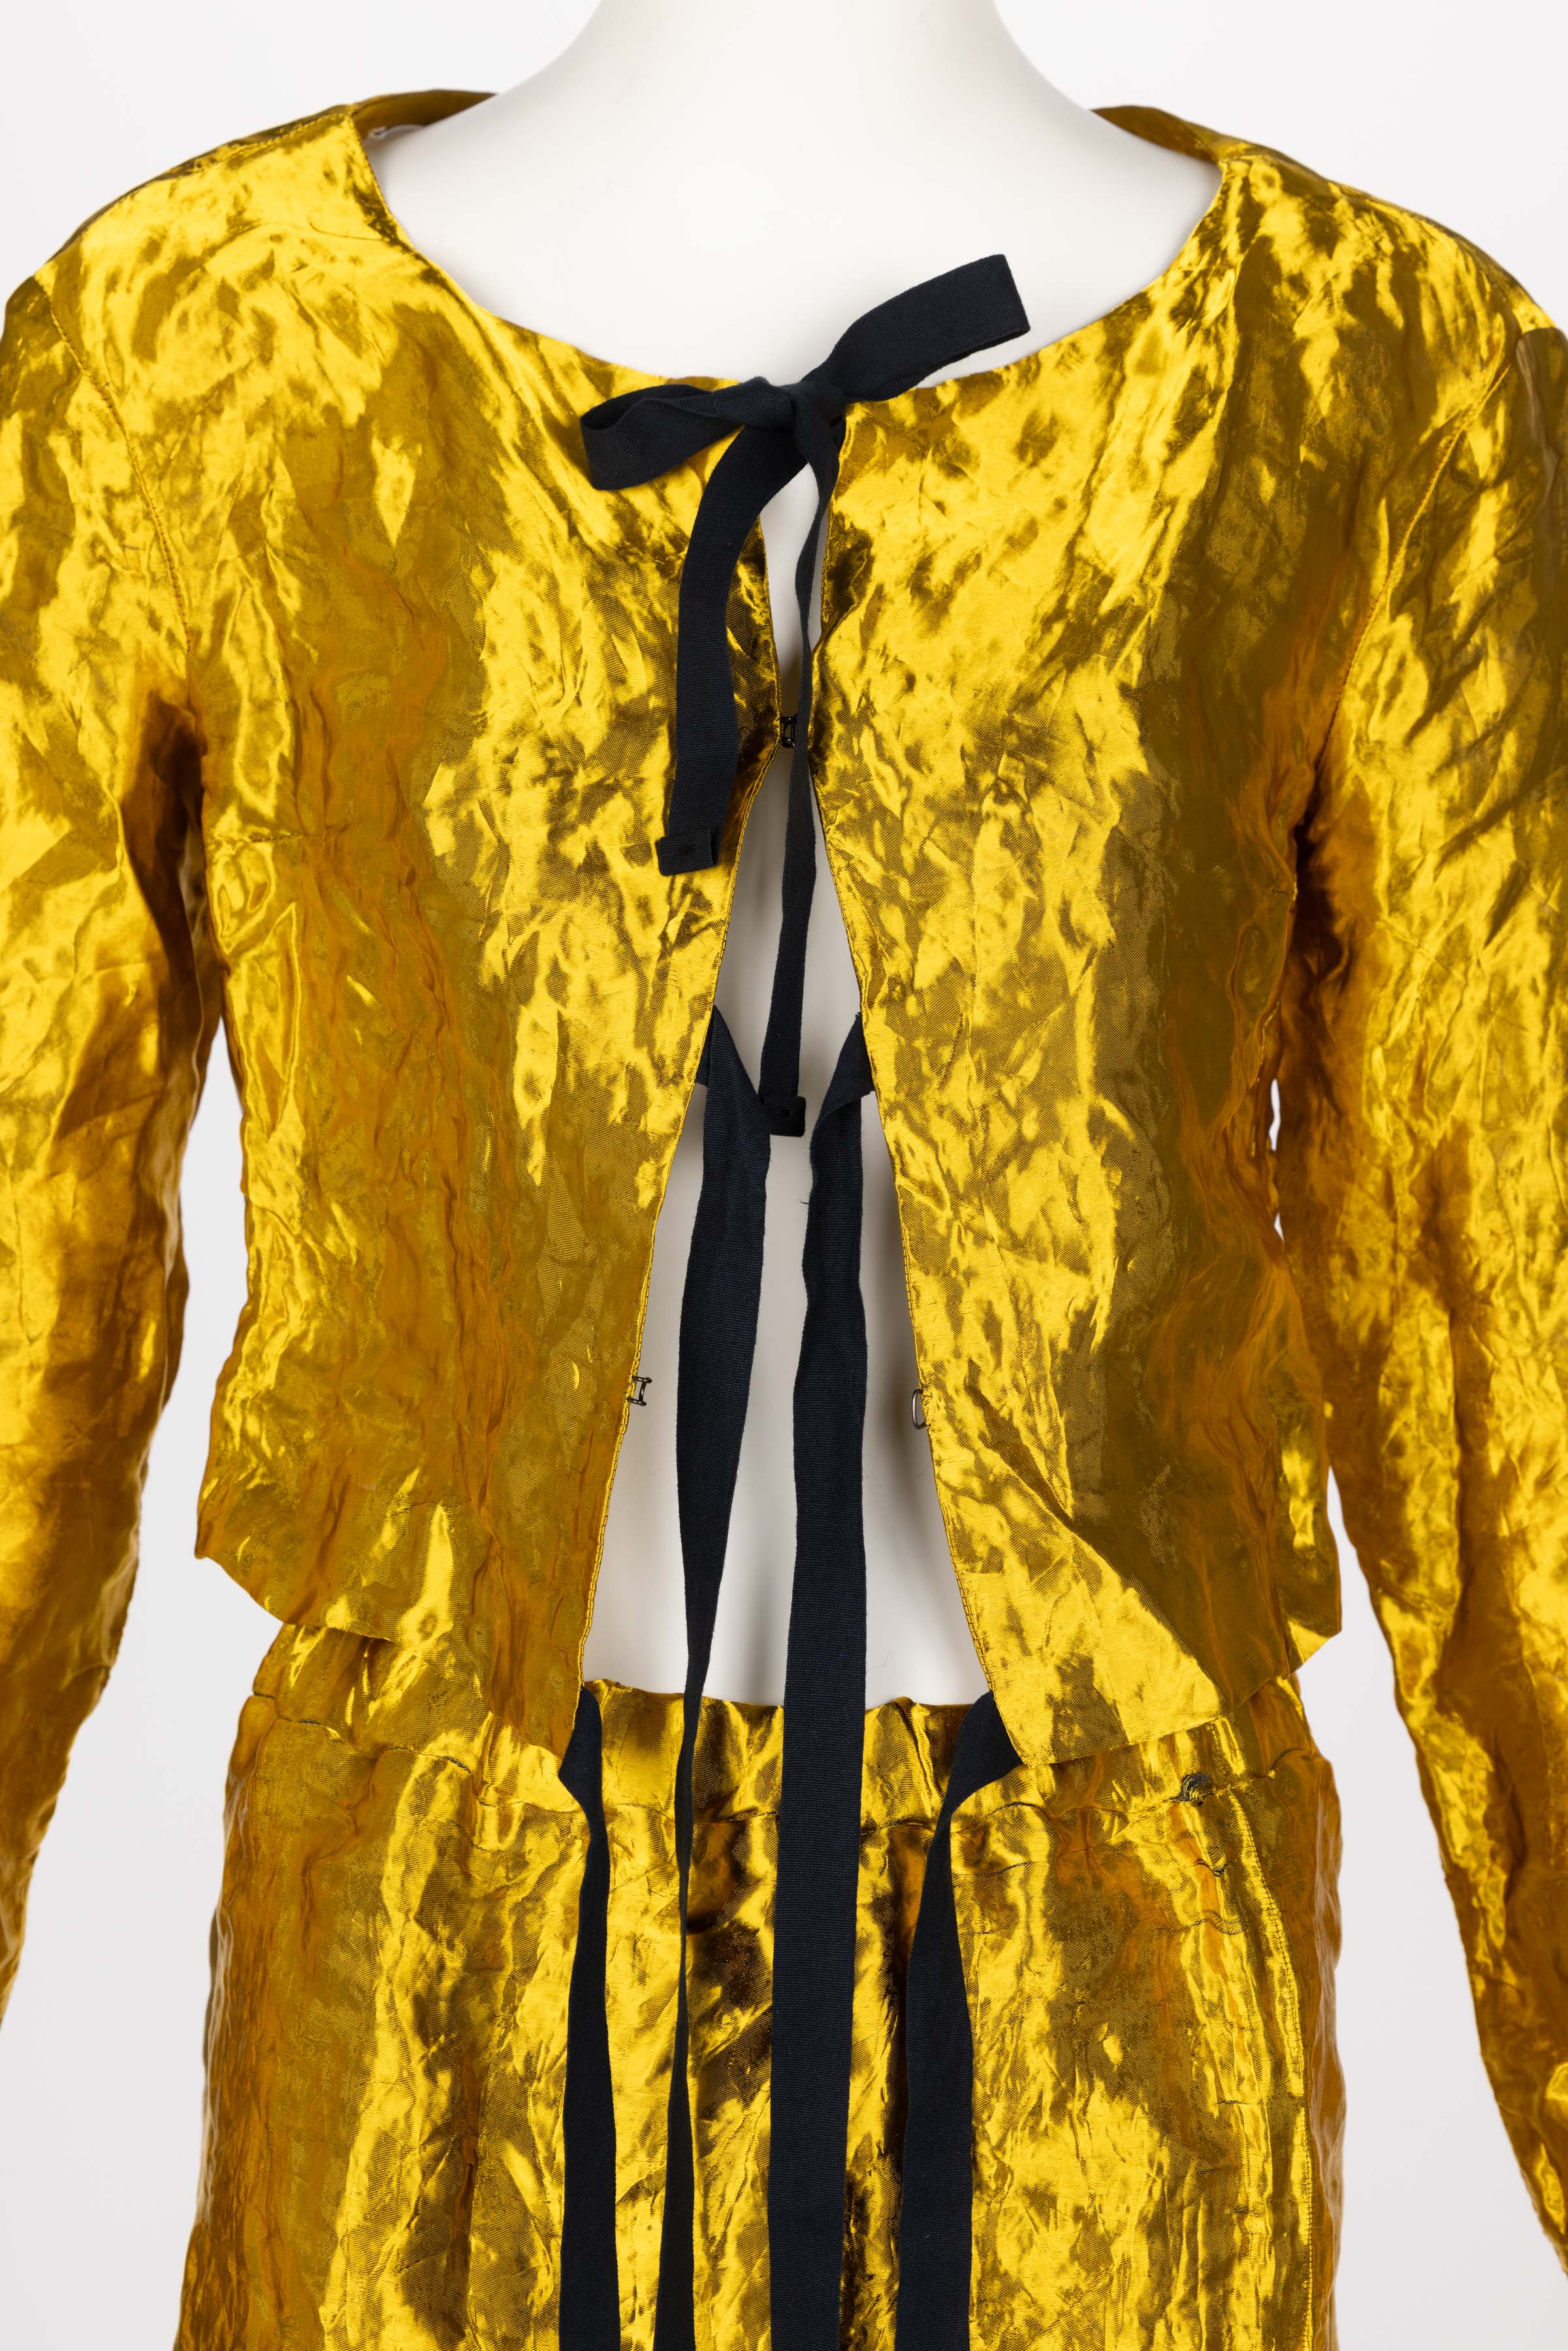 Prada Gold Metal Jacket Top & Skirt Set Spring 2009 For Sale 3